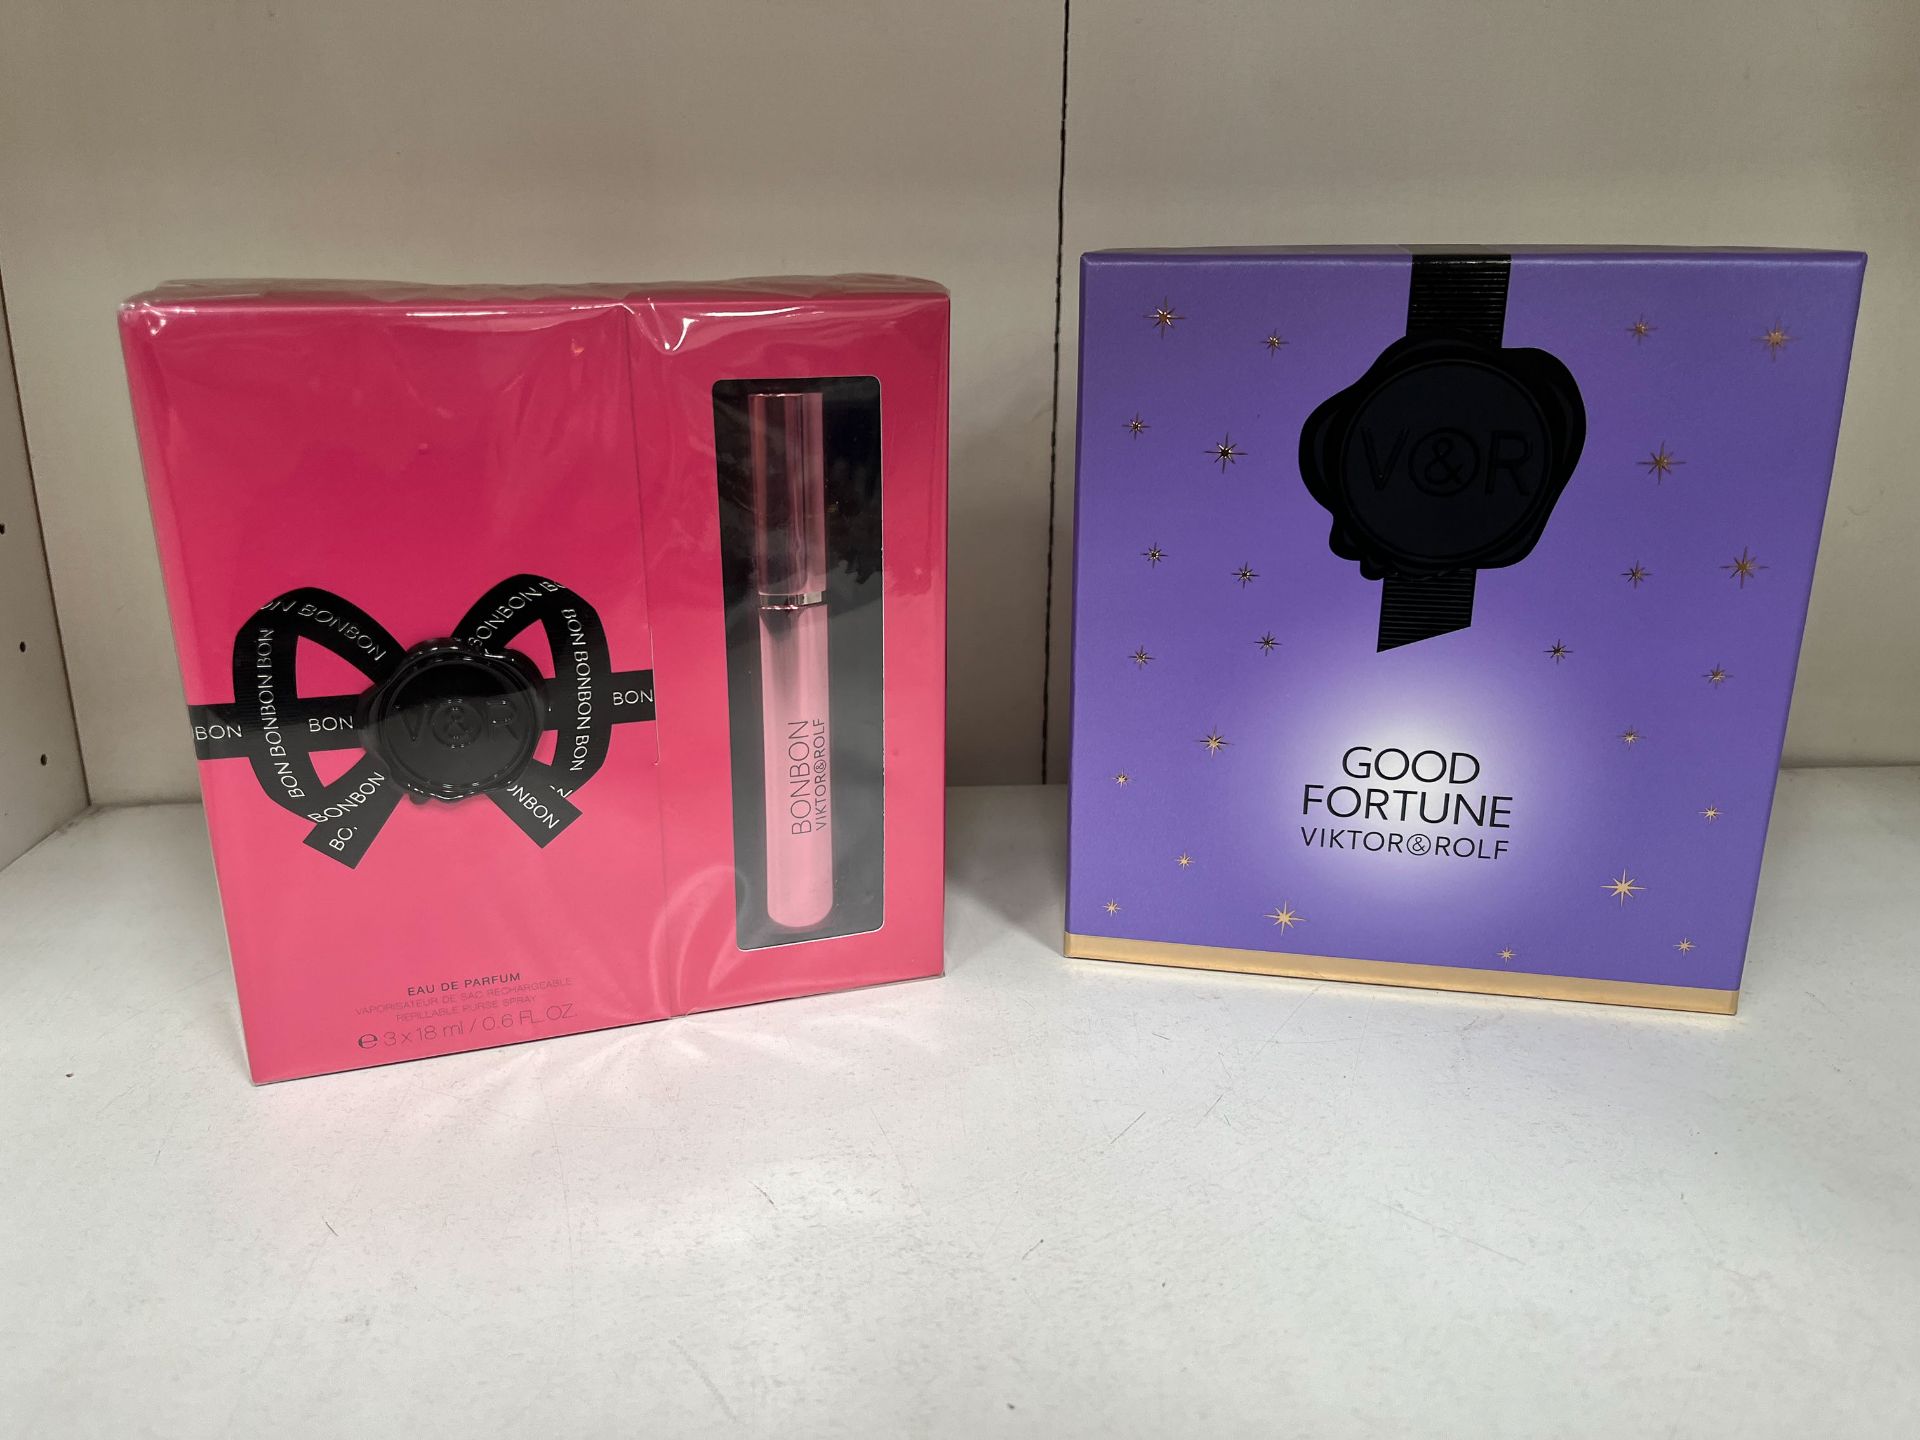 A Selection of Viktor & Rolf Perfume Gift Sets